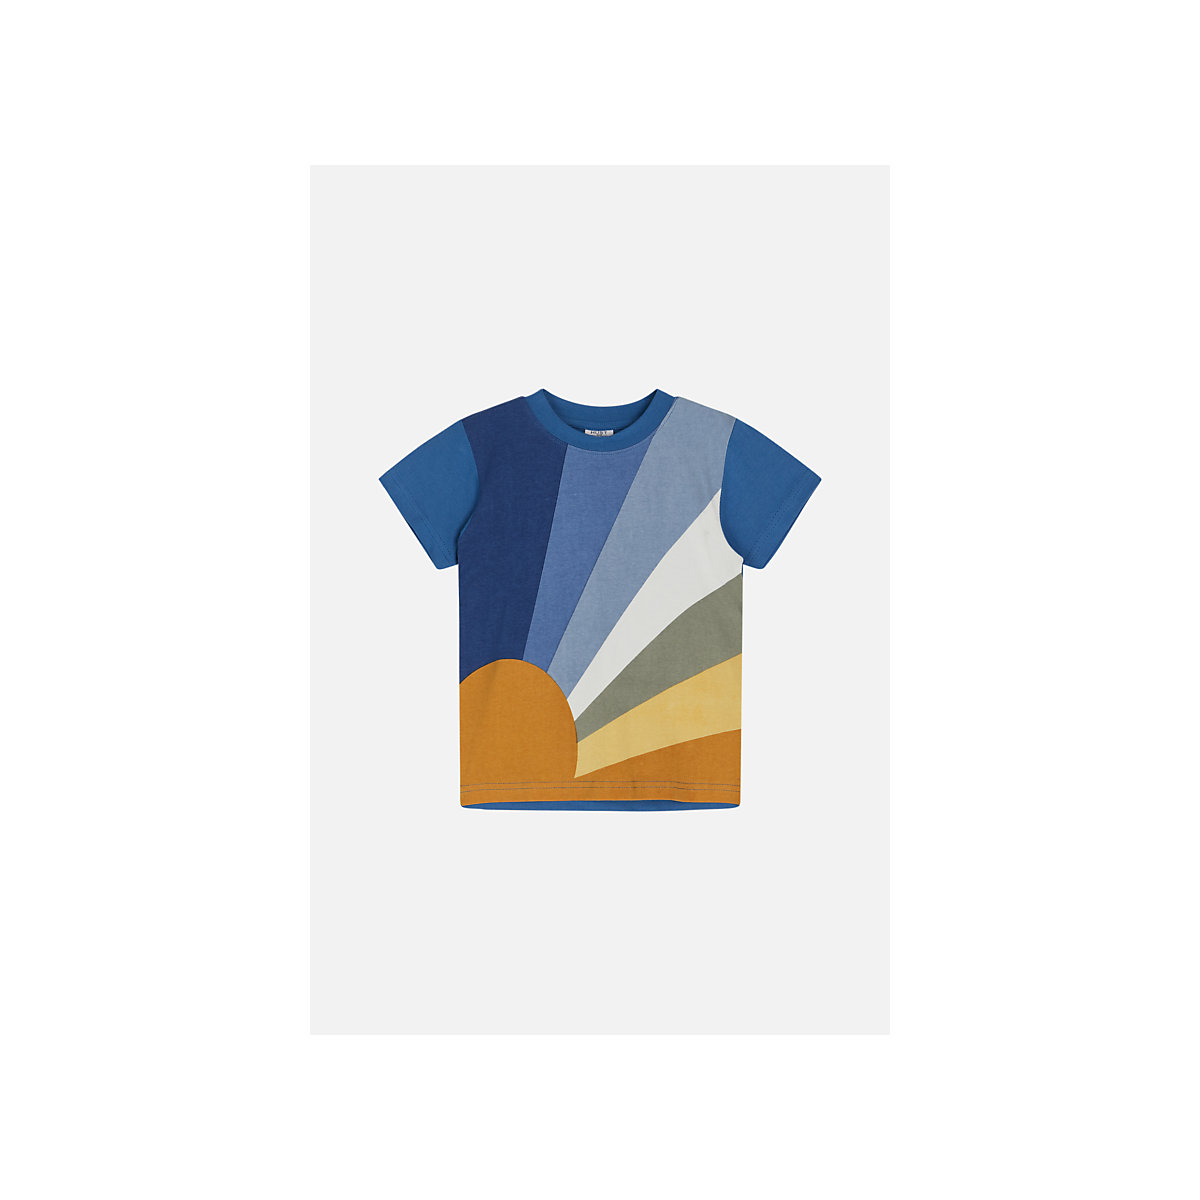 Hust & Claire T-Shirt Arthur für Jungen blau/grau